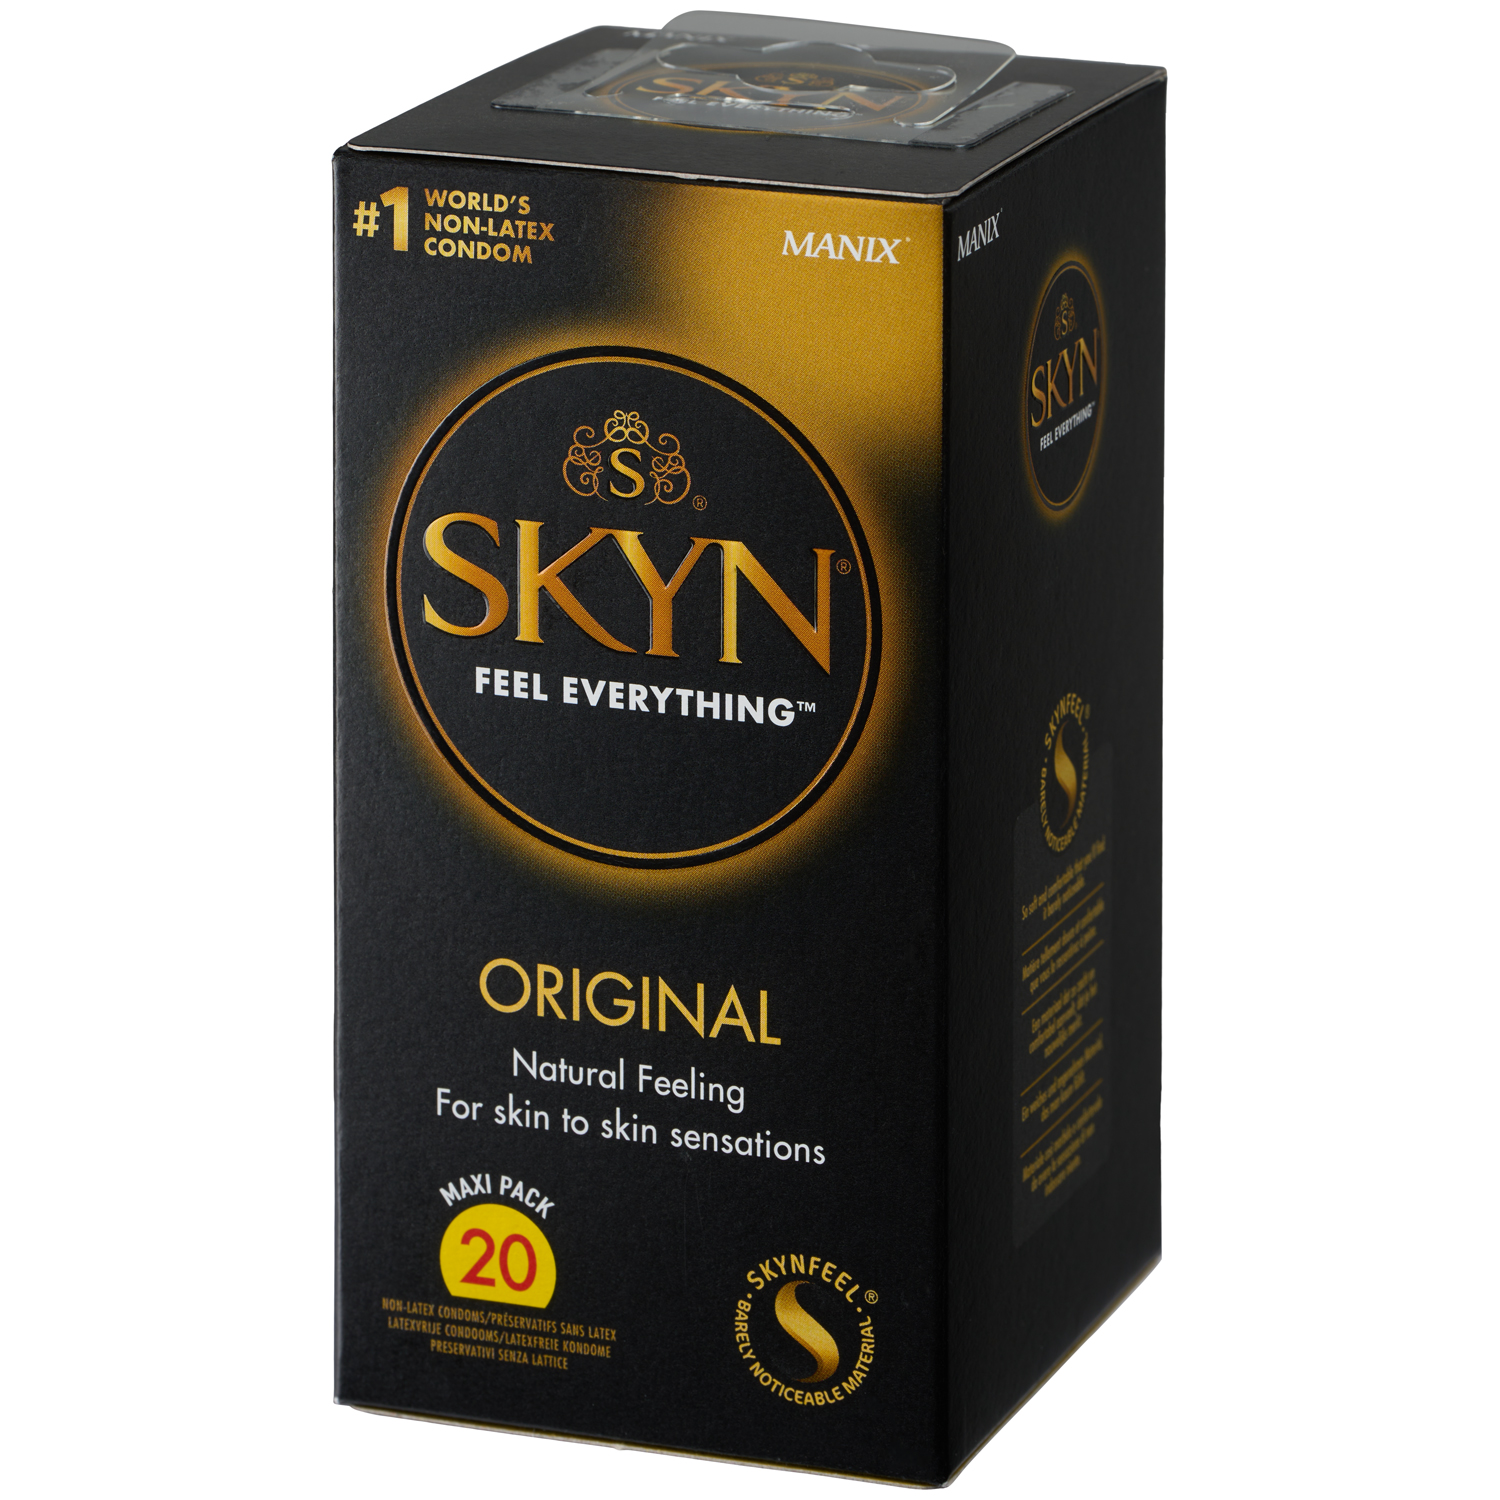 SKYN Original Latexfri Kondomer 20 stk     - Gul thumbnail